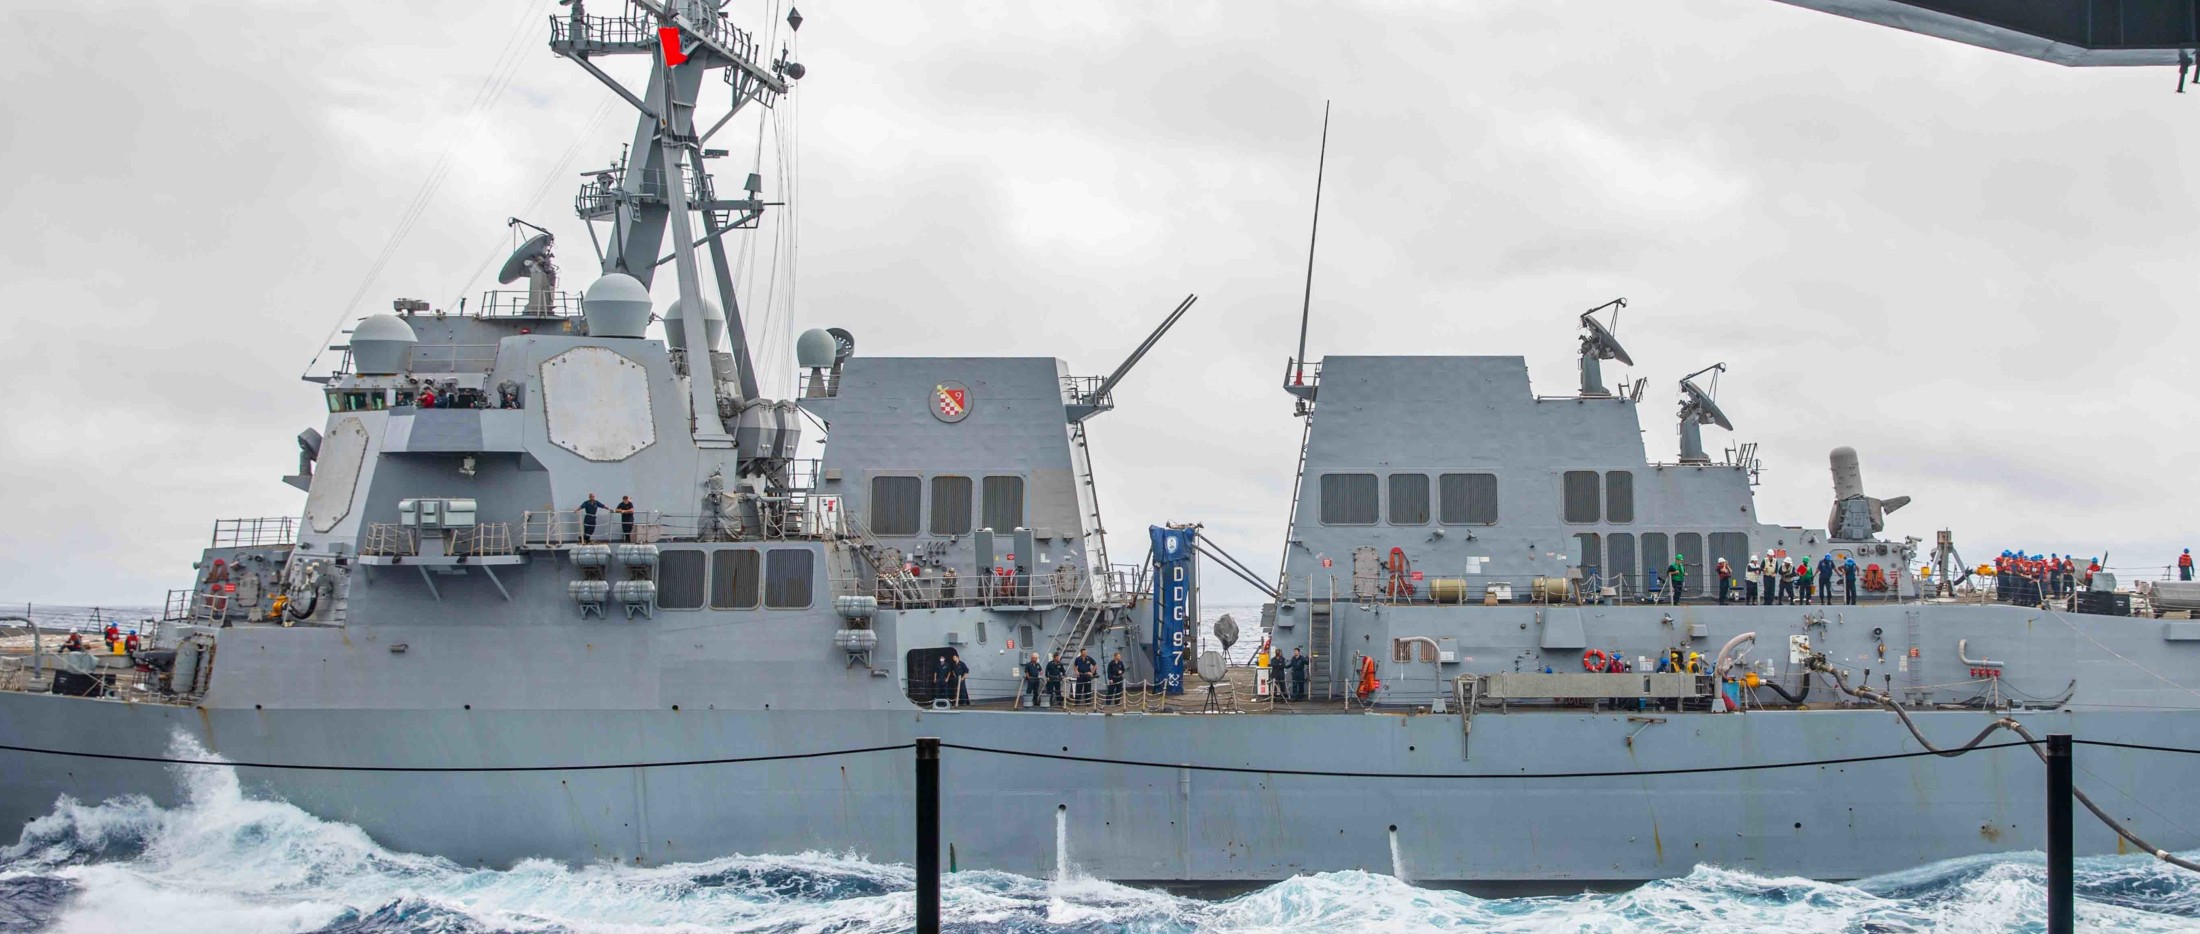 ddg-97 uss halsey arleigh burke class guided missile destroyer aegis us navy unrep 75